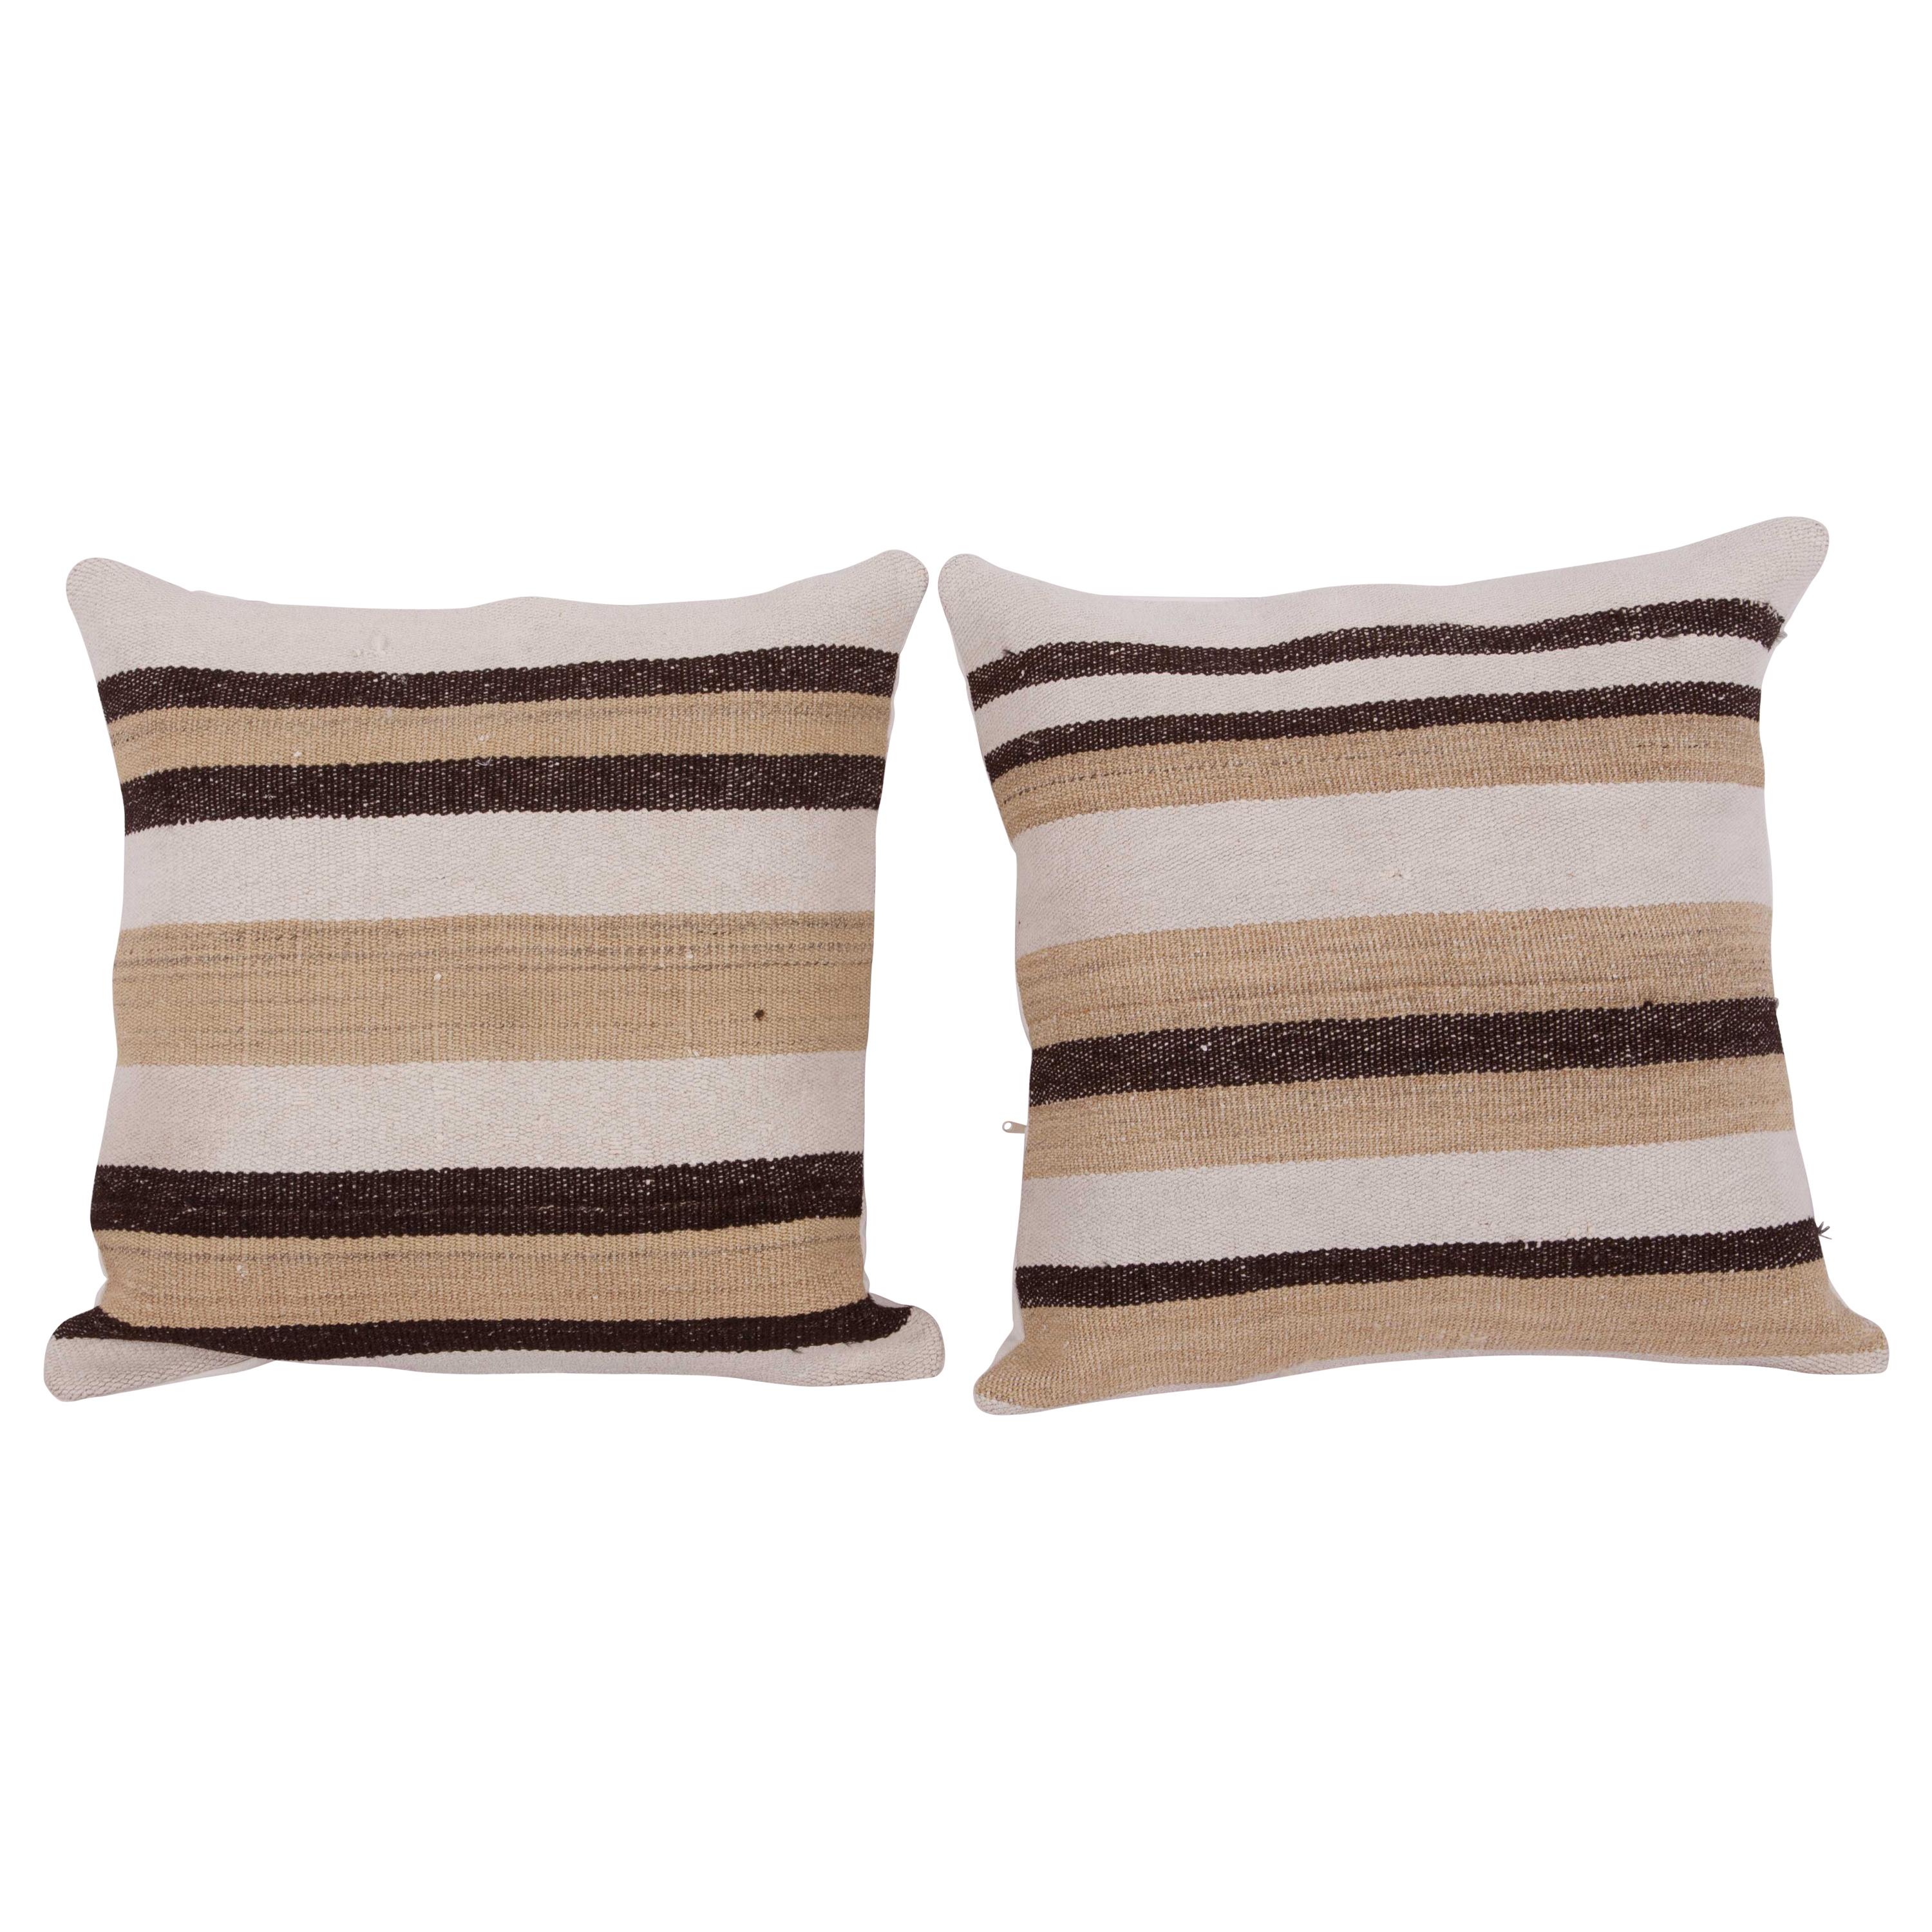 Cushion Covers or Pillows Fashioned from a Mid-20th Century Anatolian Hemp Kilim